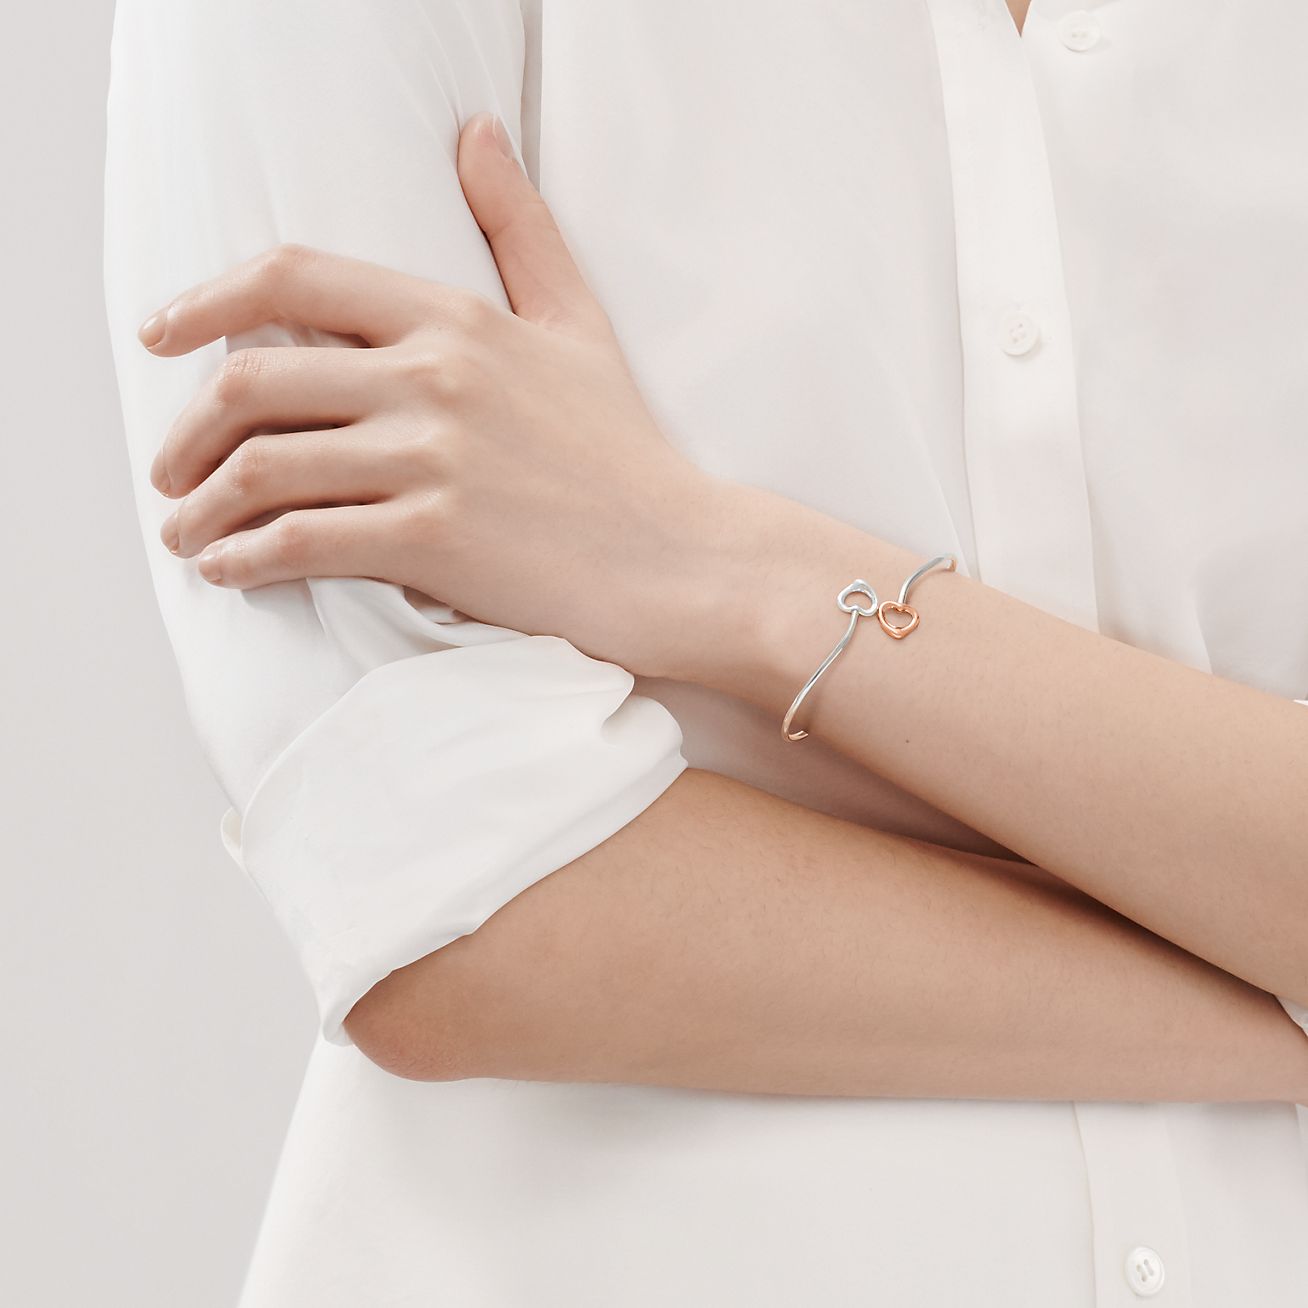 Elsa Peretti® Double Open Heart bangle in silver and 18k rose gold, medium.  | Tiffany & Co.